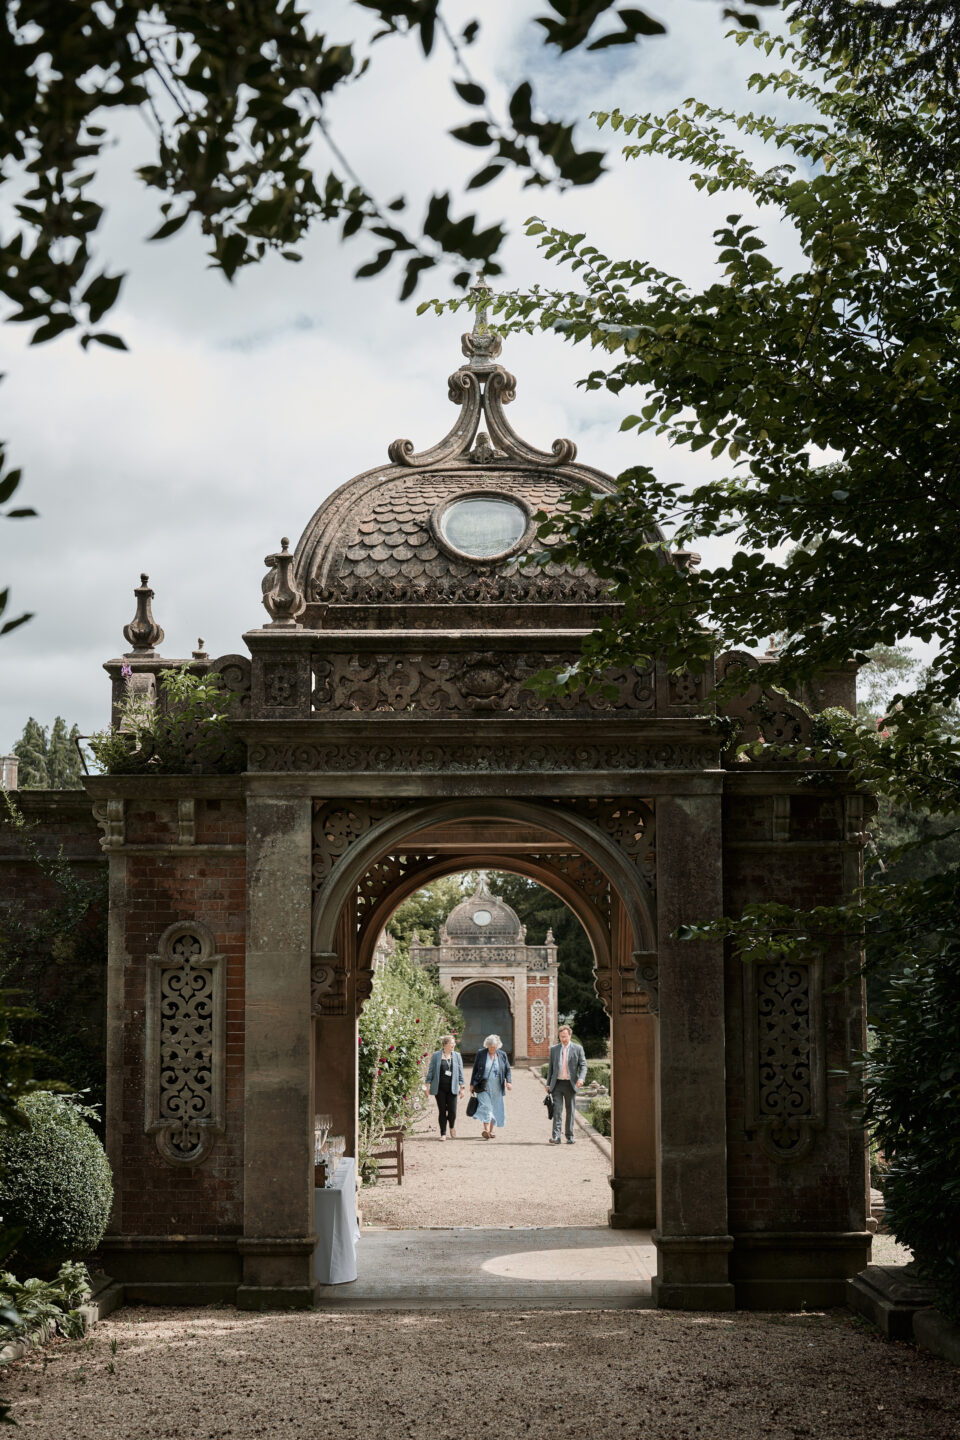 A couple getting married walks through a fancy gate in a garden.